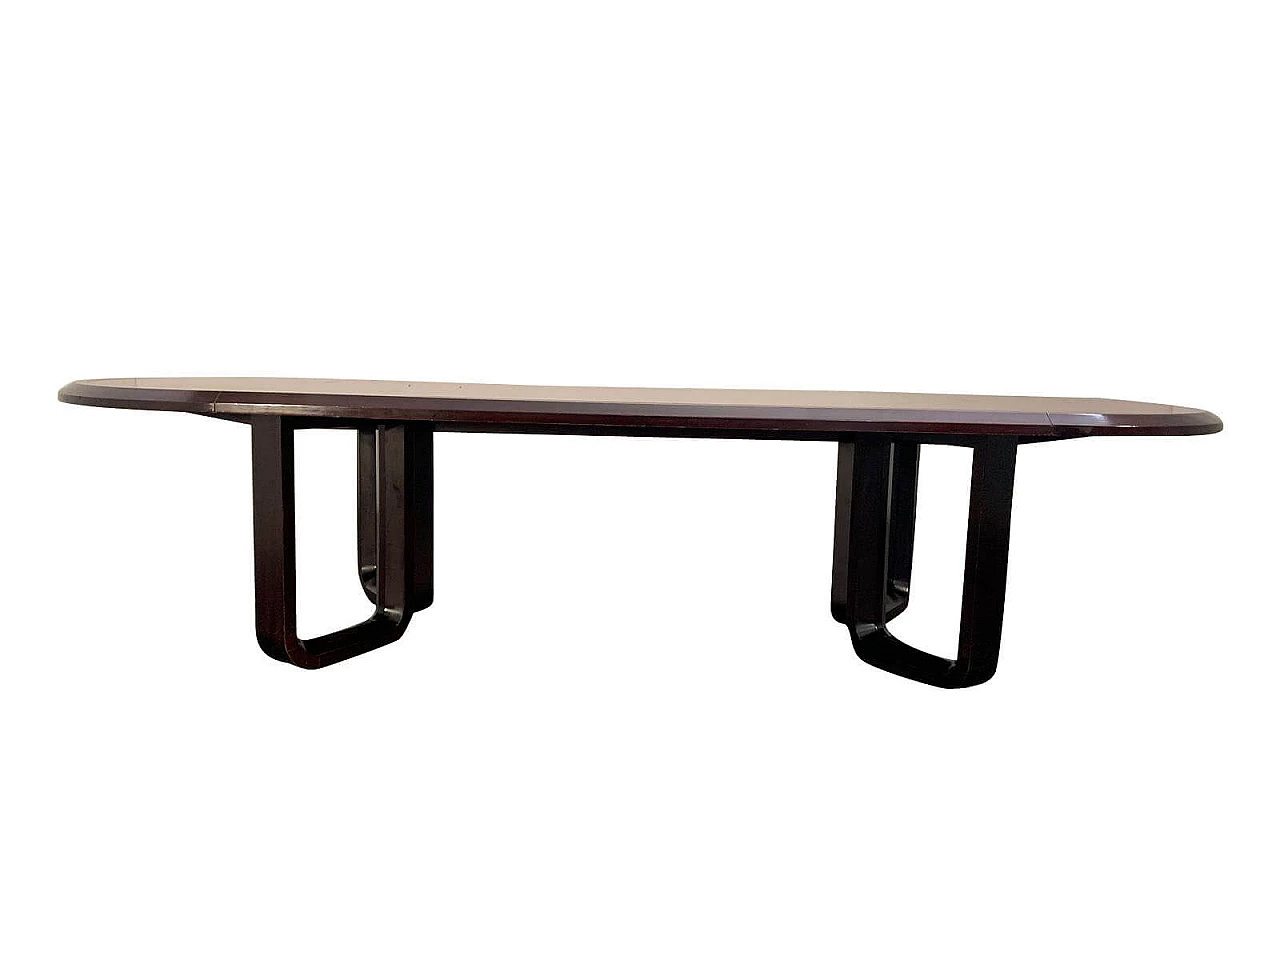 Elliptical table in solid rosewood and mahogany veneer, 1960s 1096872